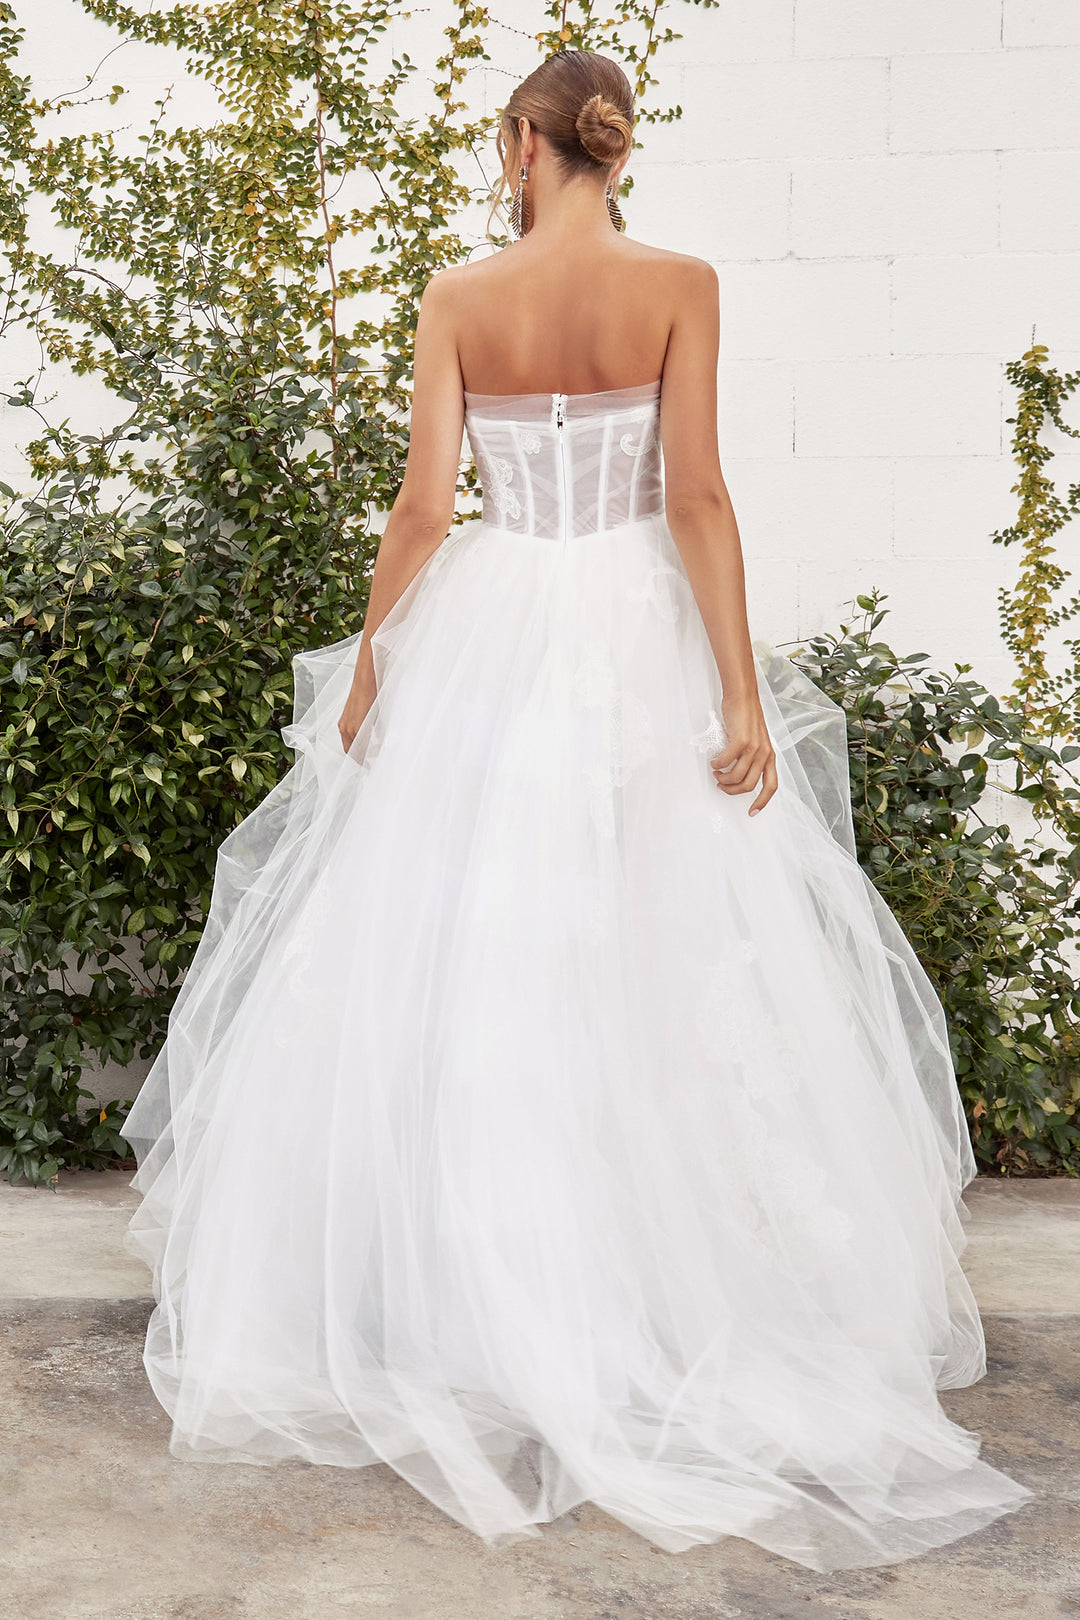 CINDERELLA DIVINE A1050W Strapless Illusion Corset Bridal Gown